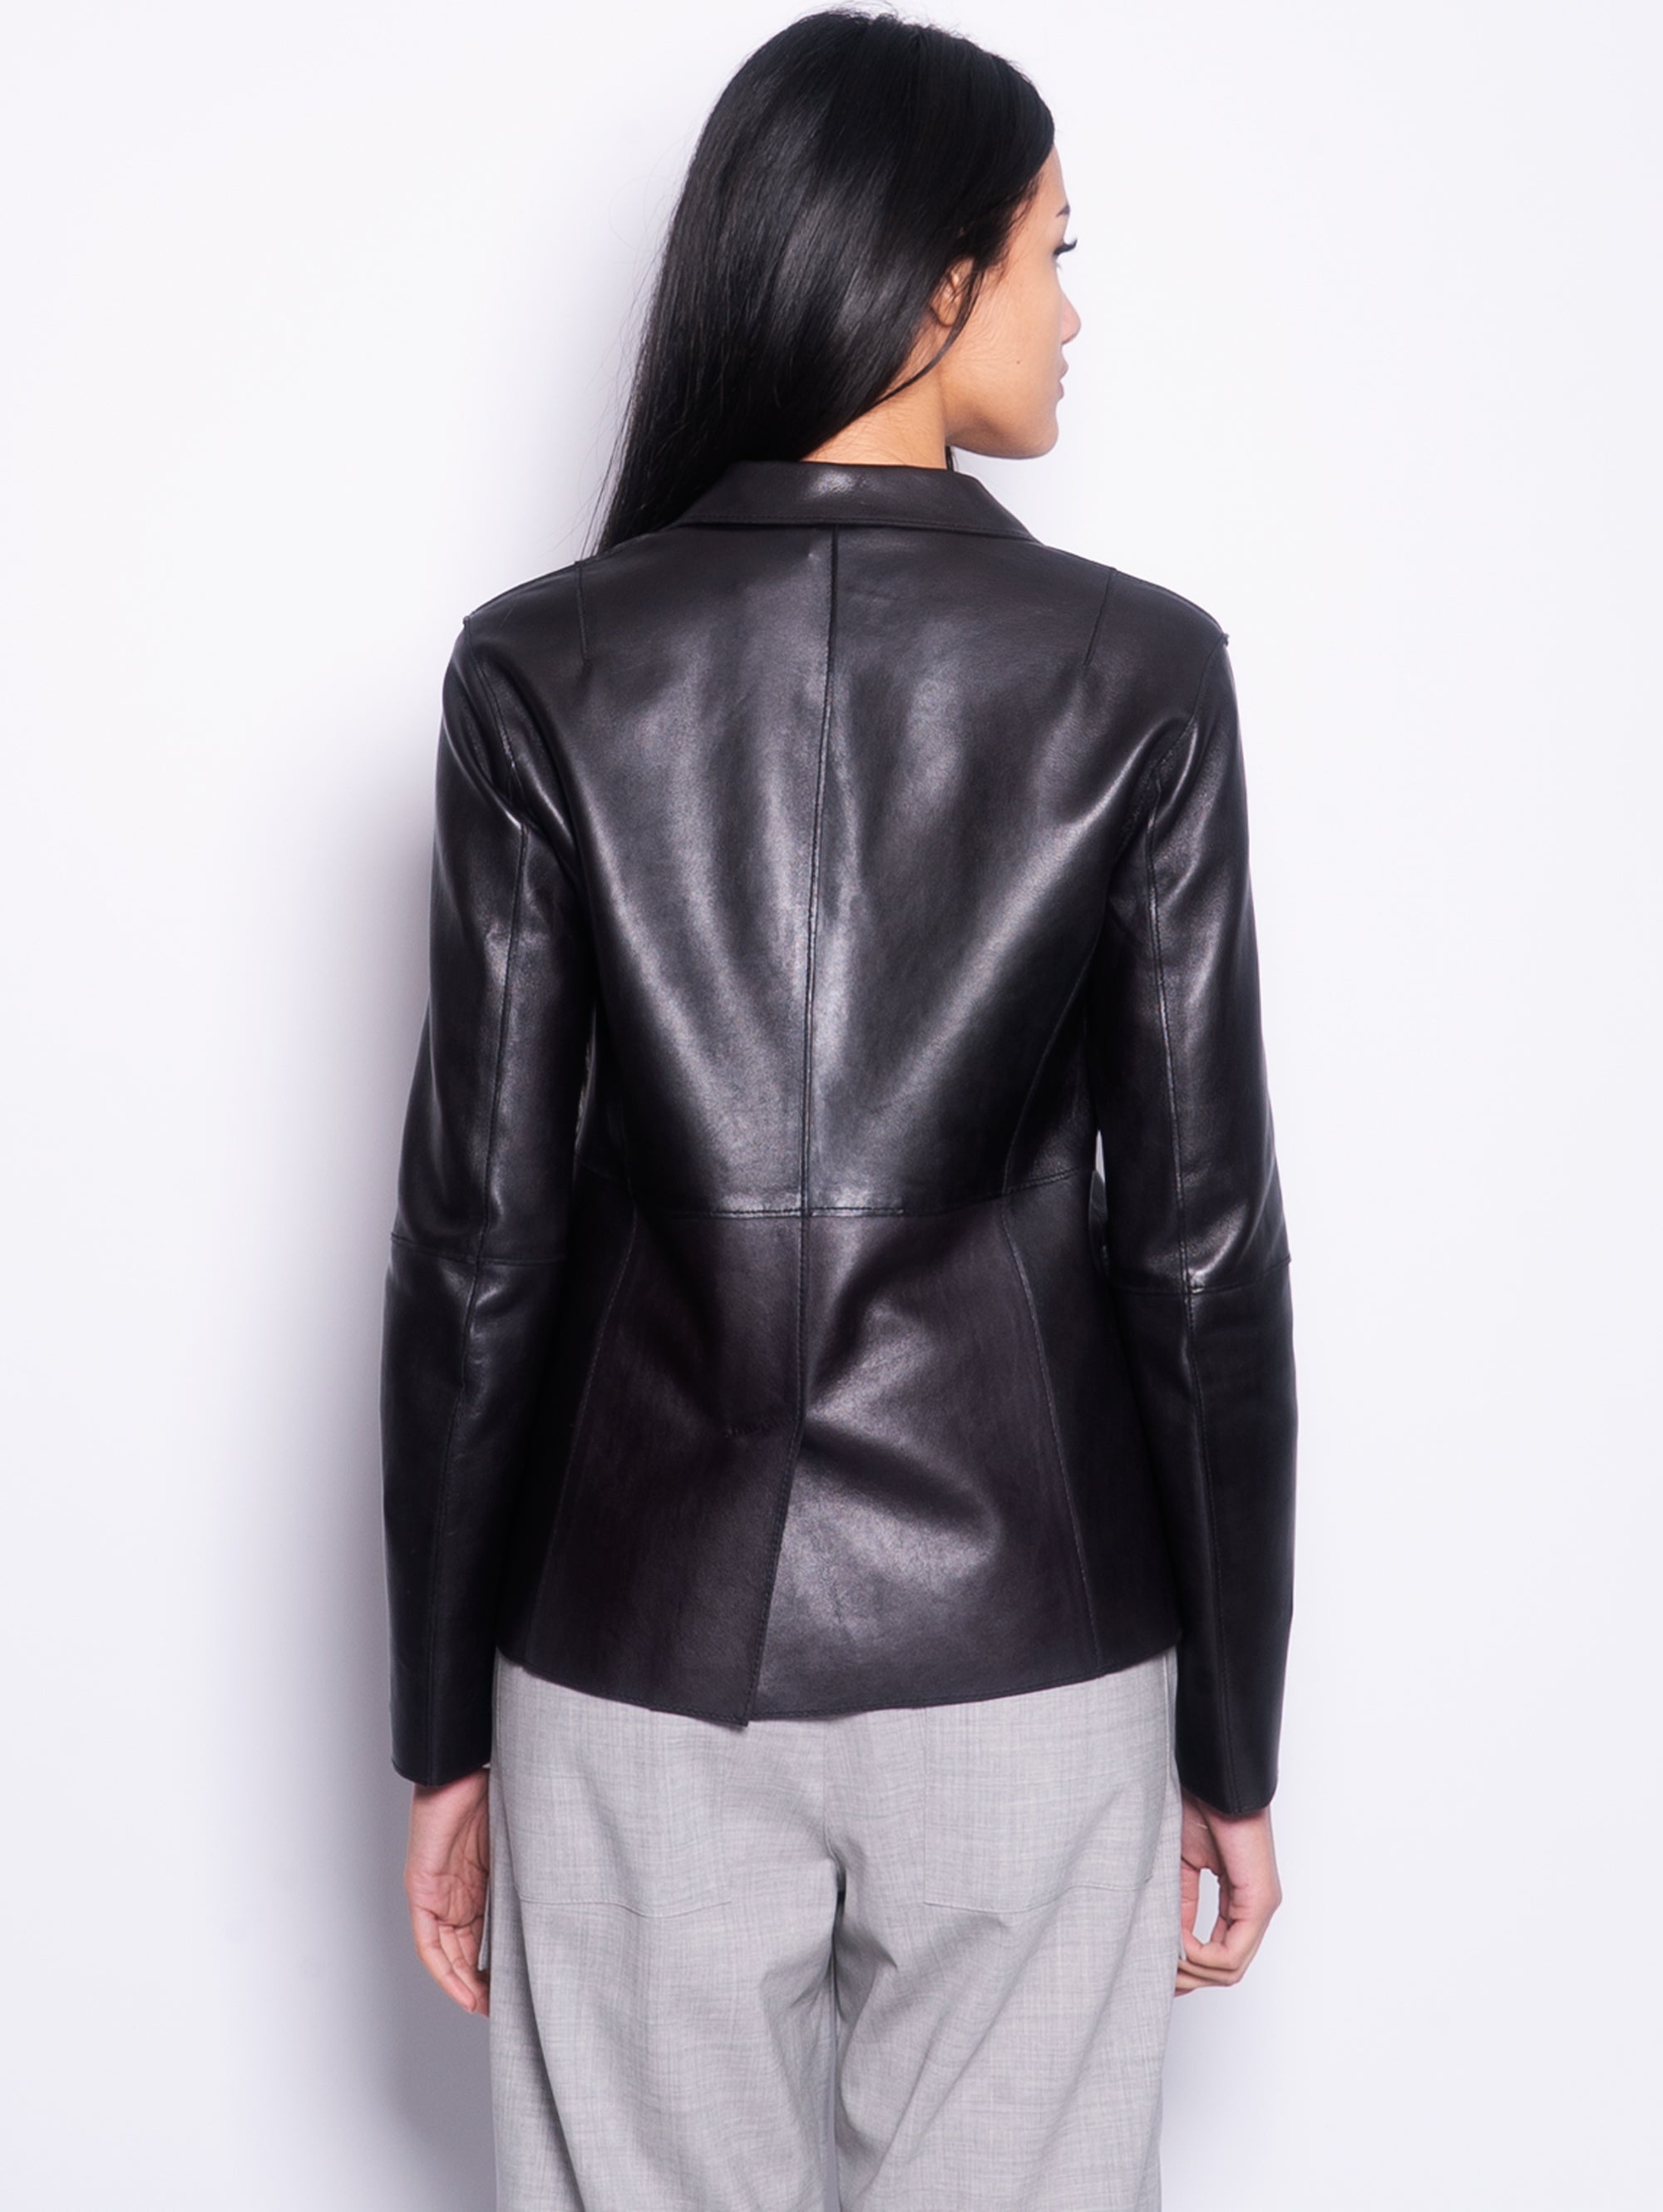 Black Leather Blazer Jacket